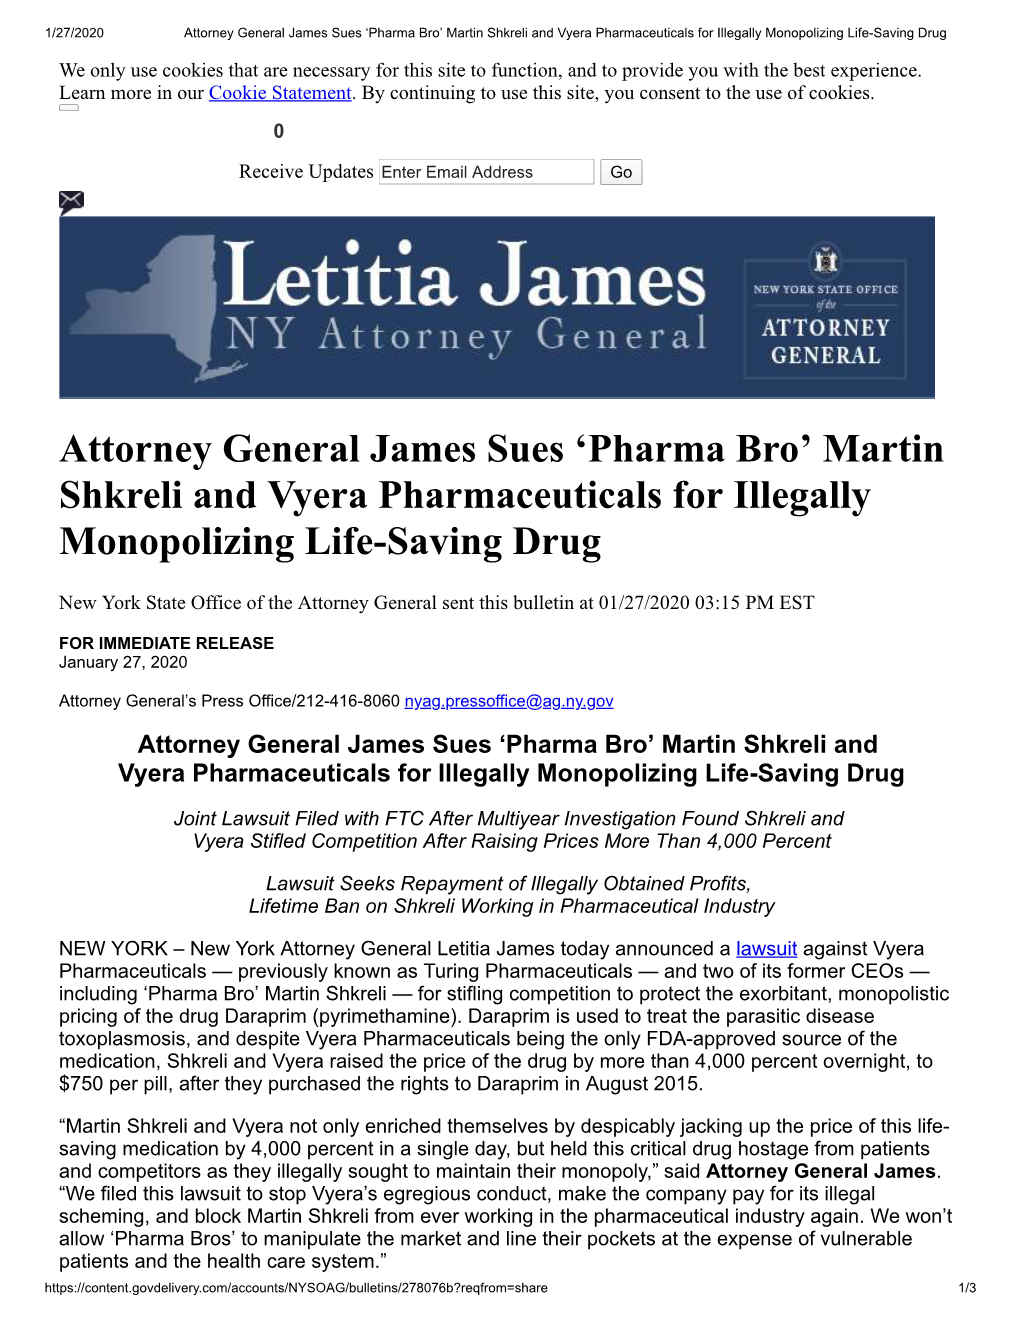 Attorney General James Sues 'Pharma Bro' Martin Shkreli And